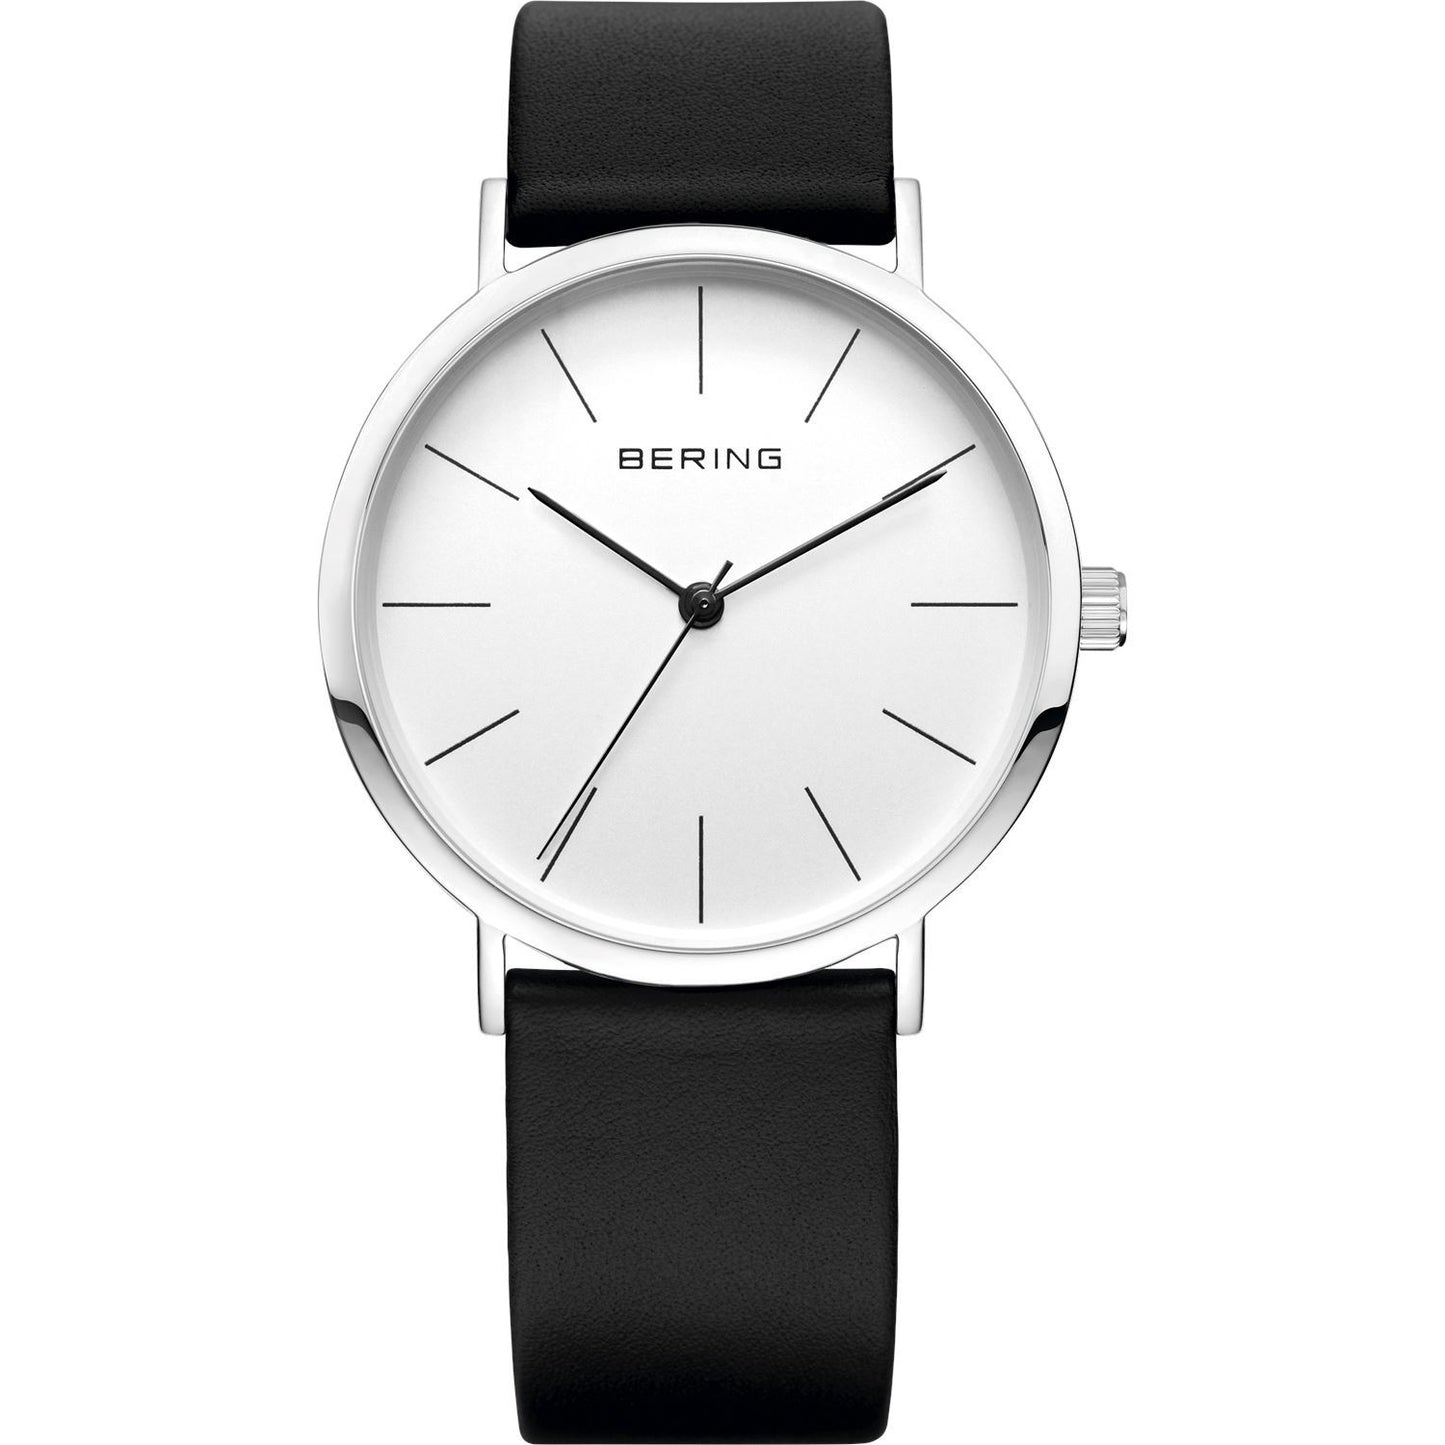 Reloj Bering minimalista unisex cuero negro